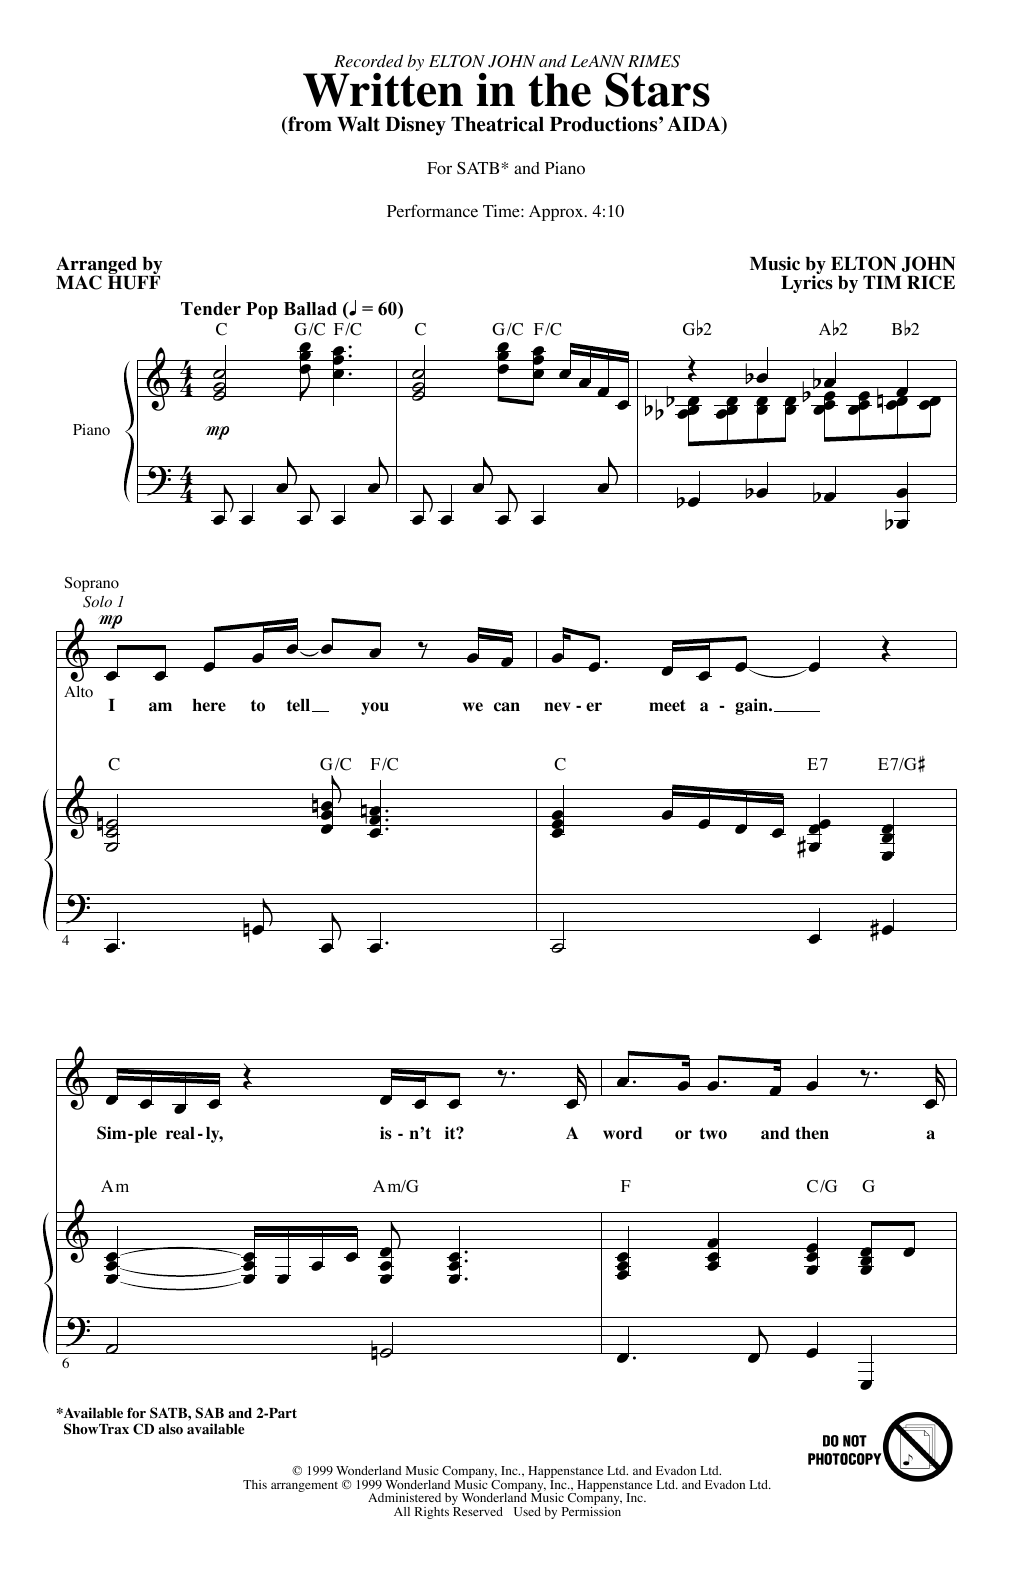 Elton John & LeAnn Rimes Written In The Stars (from Aida) (arr. Mac Huff) Sheet Music Notes & Chords for SATB Choir - Download or Print PDF